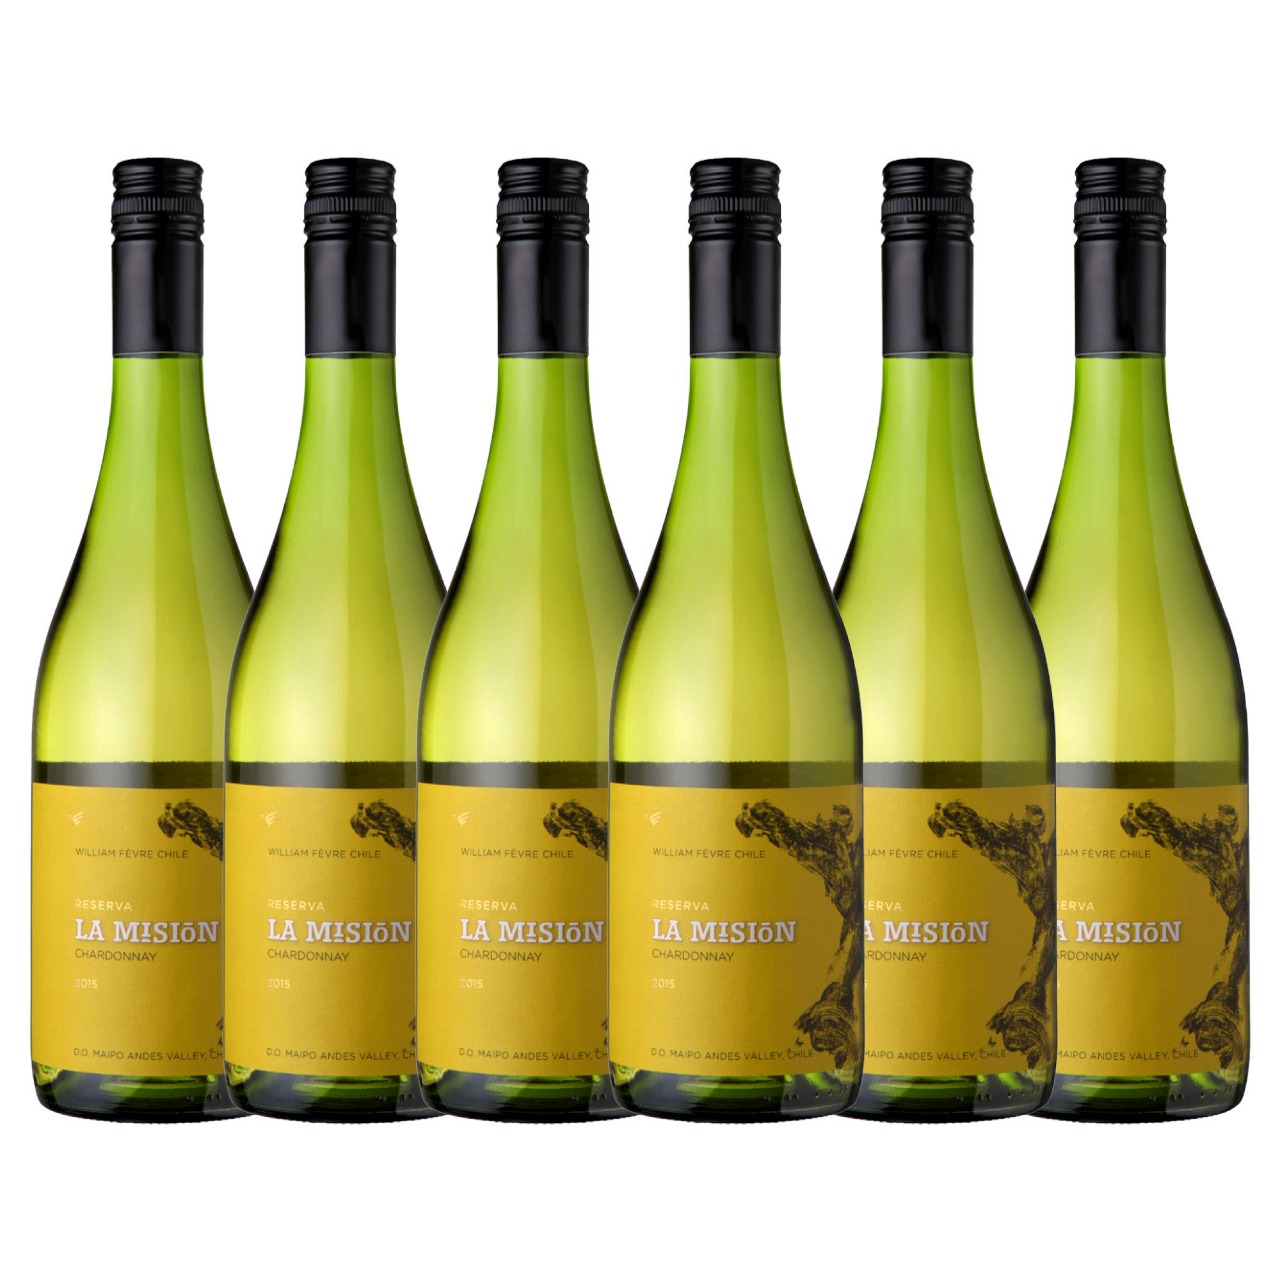 Caixa com 6 garrafas - Vinho La Mision Reserva Chardonnay